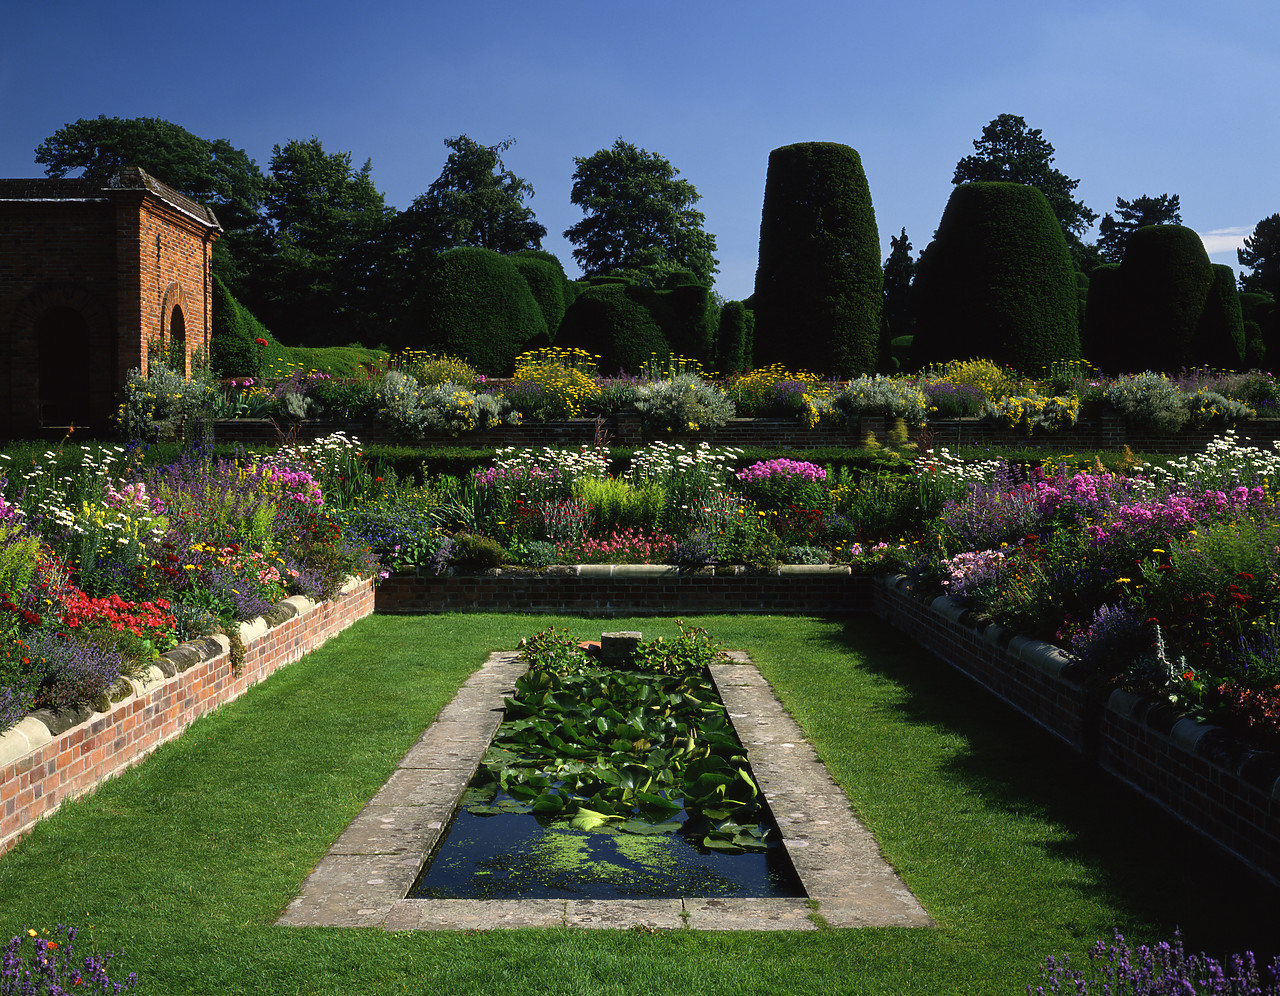 #892324 - Sunken Gardens at Packwood House, Lapworth, Warwickshire, England